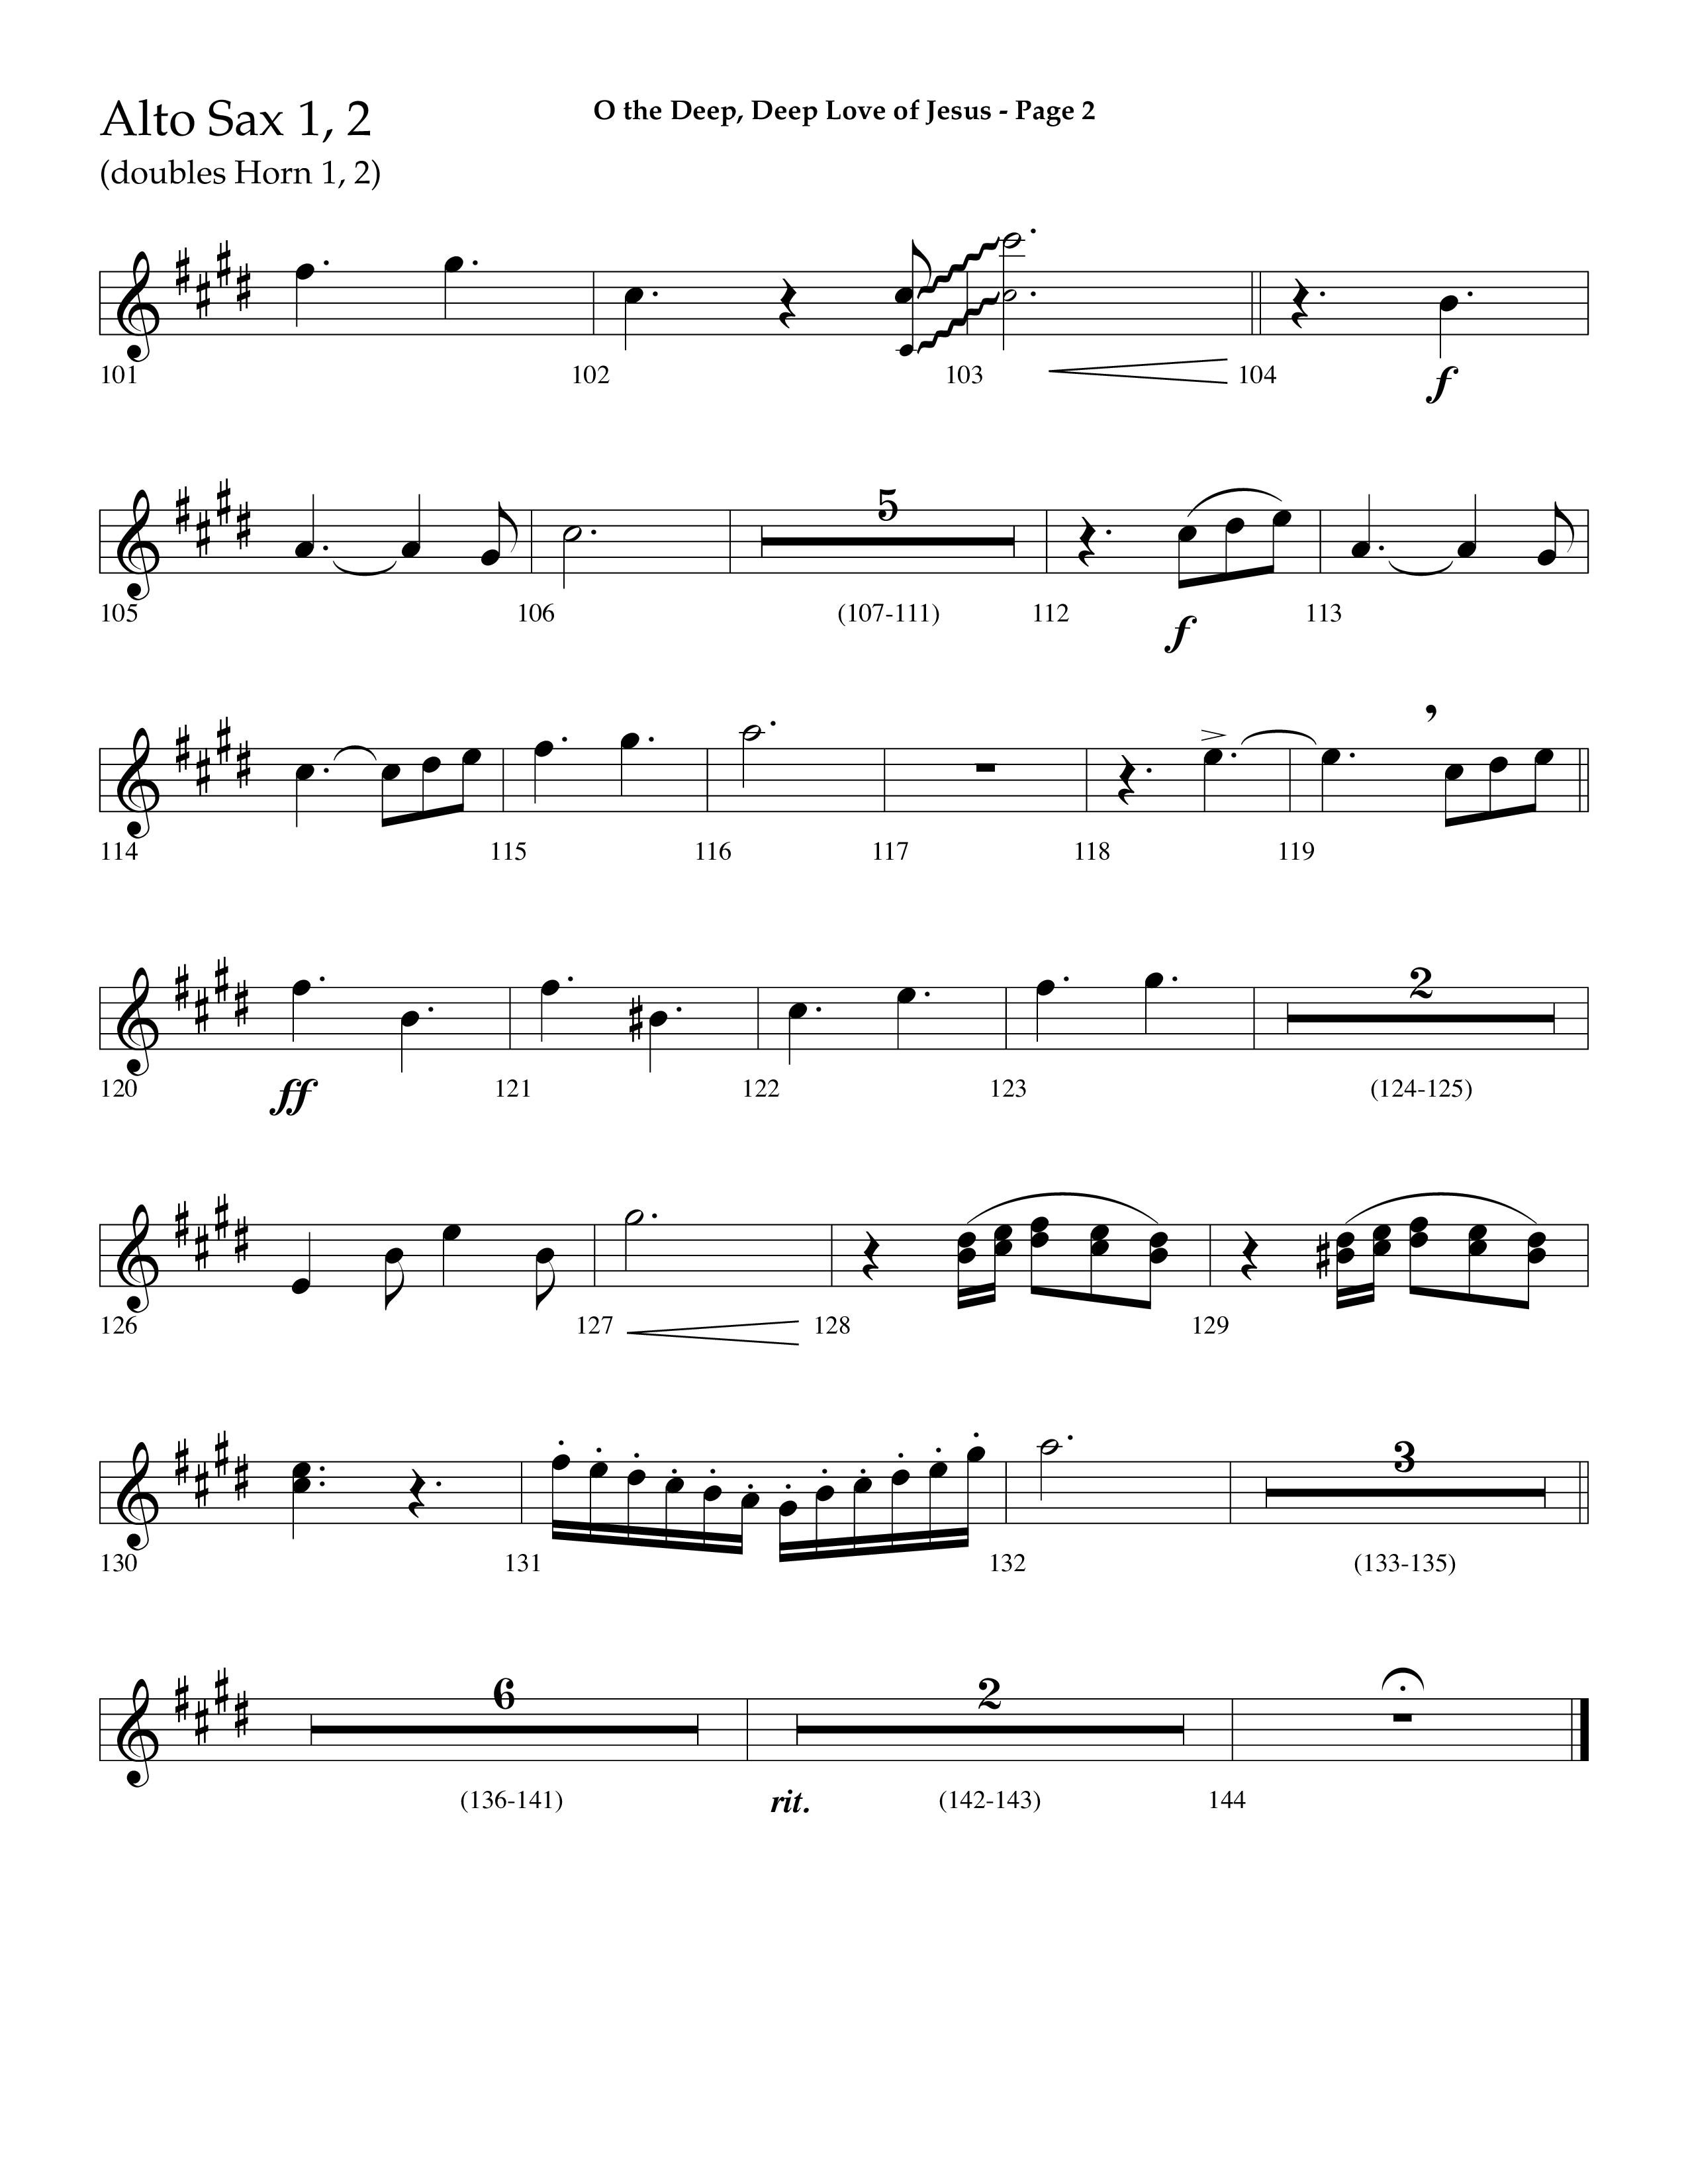 O The Deep Deep Love Of Jesus (Choral Anthem SATB) Alto Sax 1/2 (Lifeway Choral / Arr. Dave Williamson)